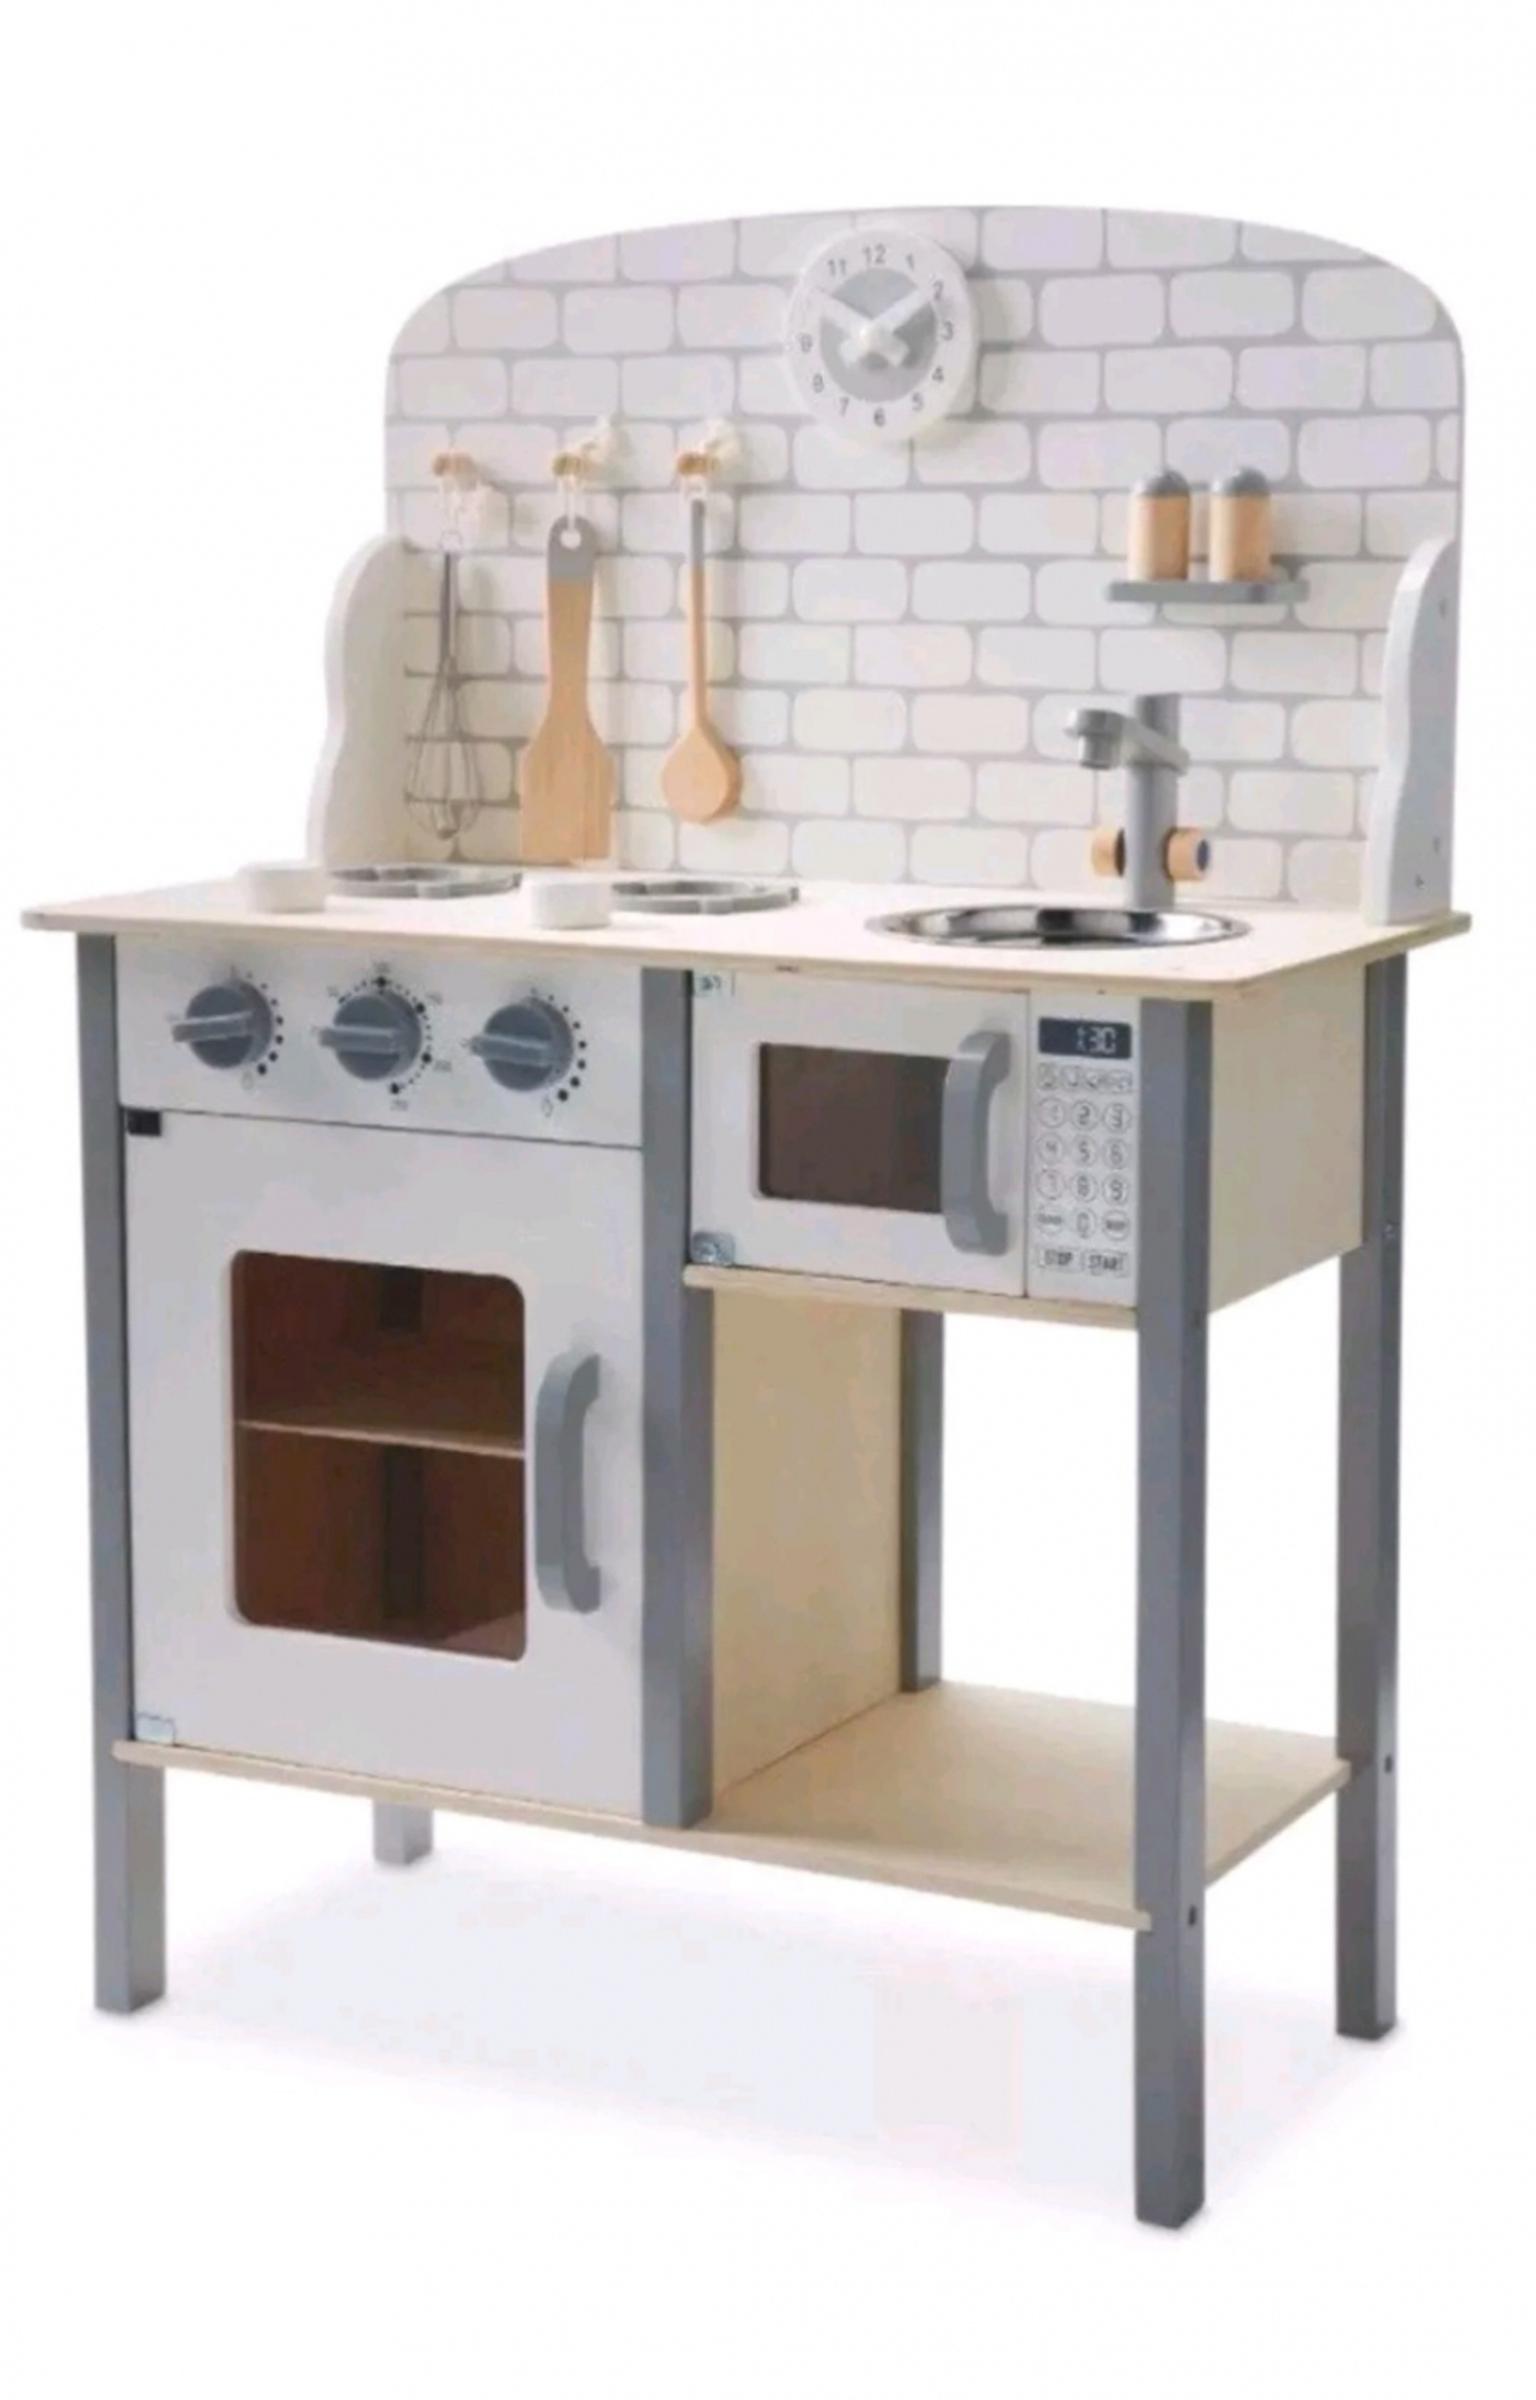 aldi kitchen set